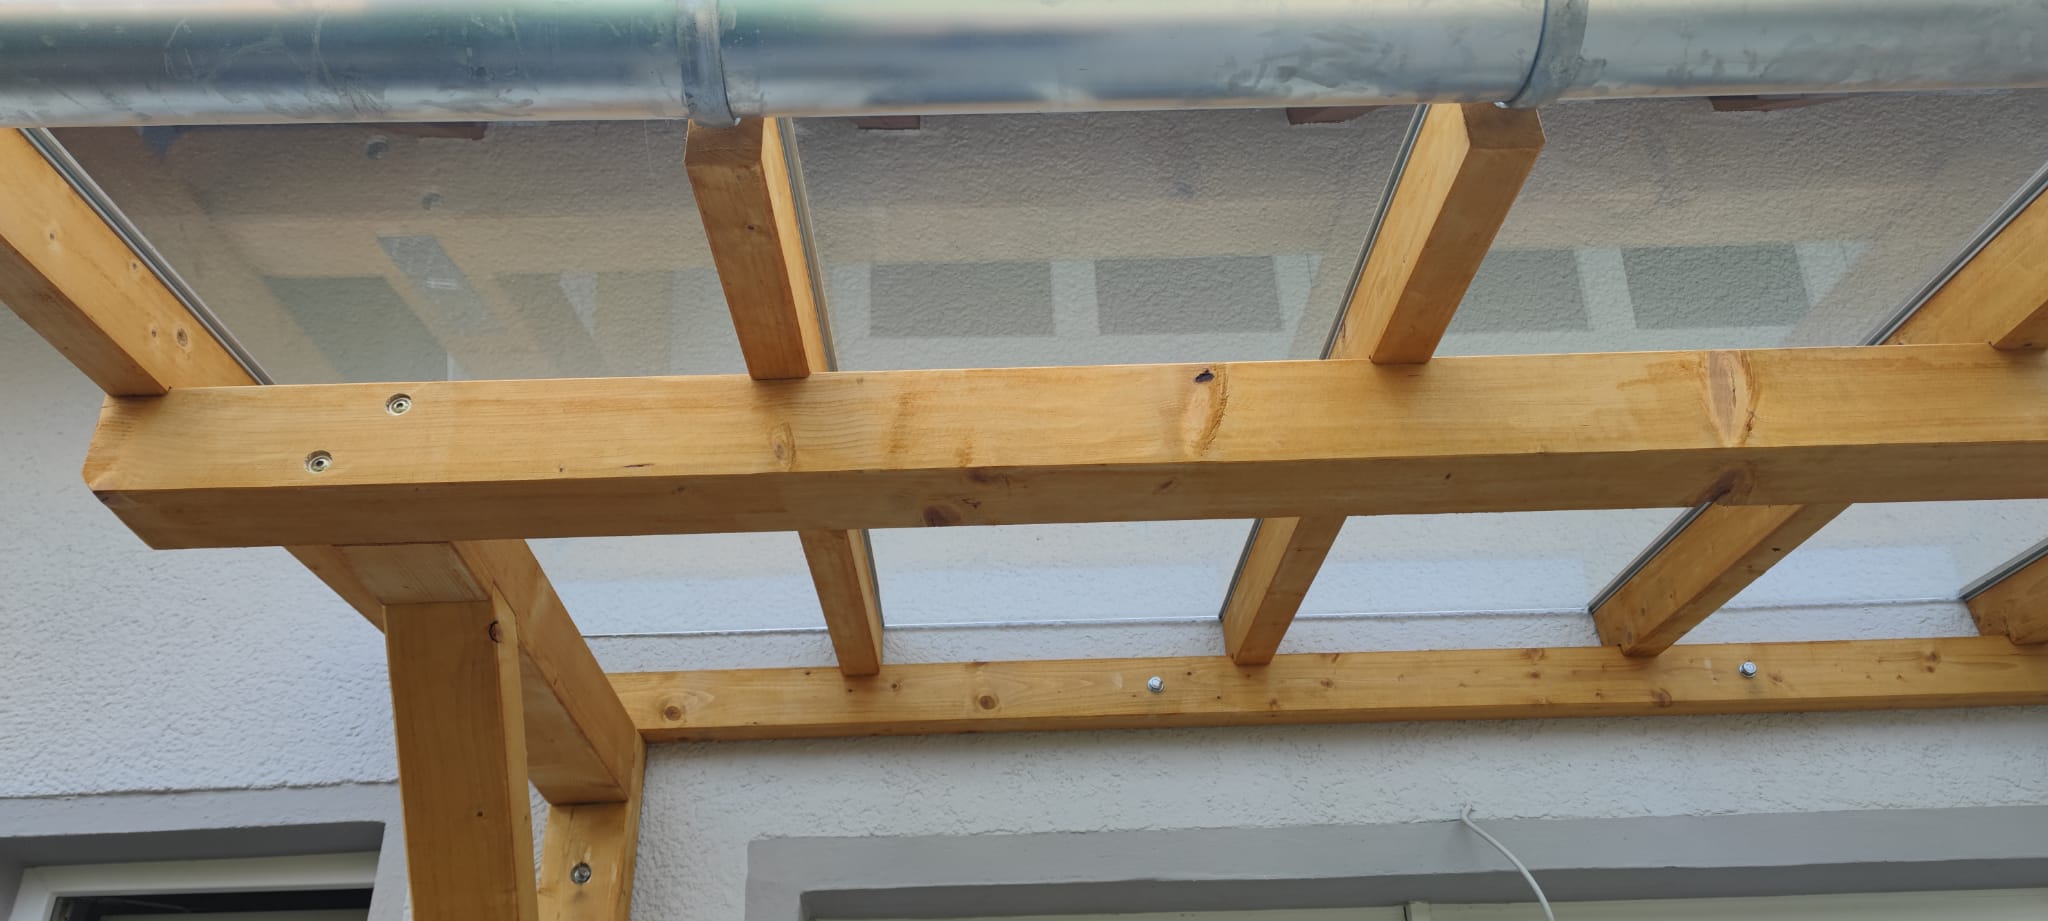 KVH-Holz mit SG-Sicherheitsglas Haustürüberdachung